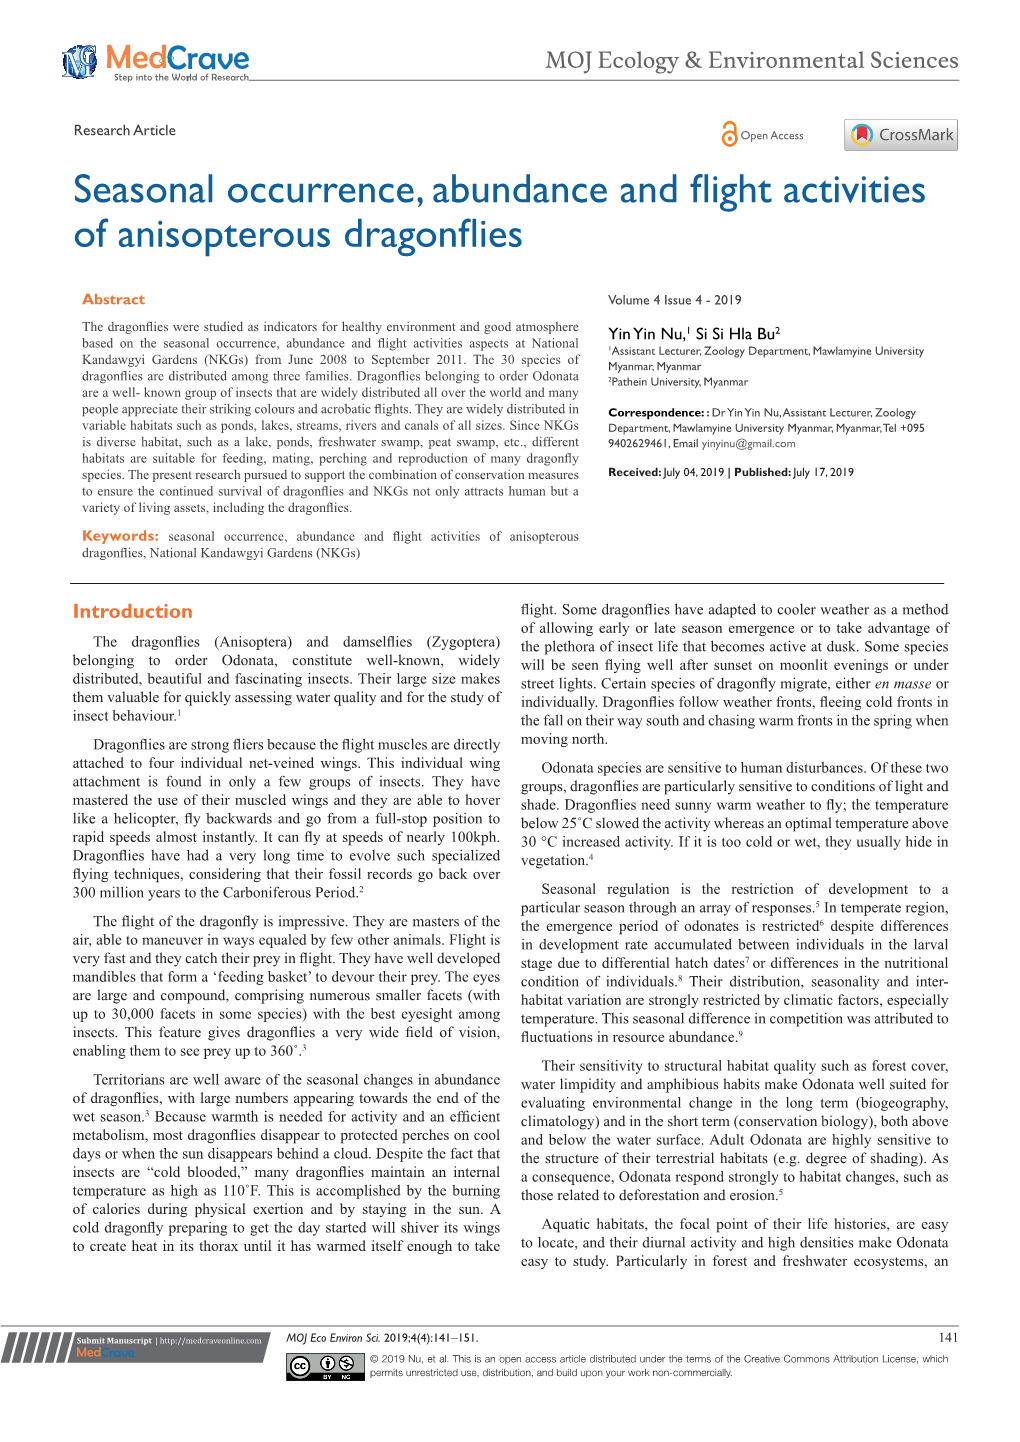 Seasonal Occurrence, Abundance and Flight Activities of Anisopterous Dragonflies